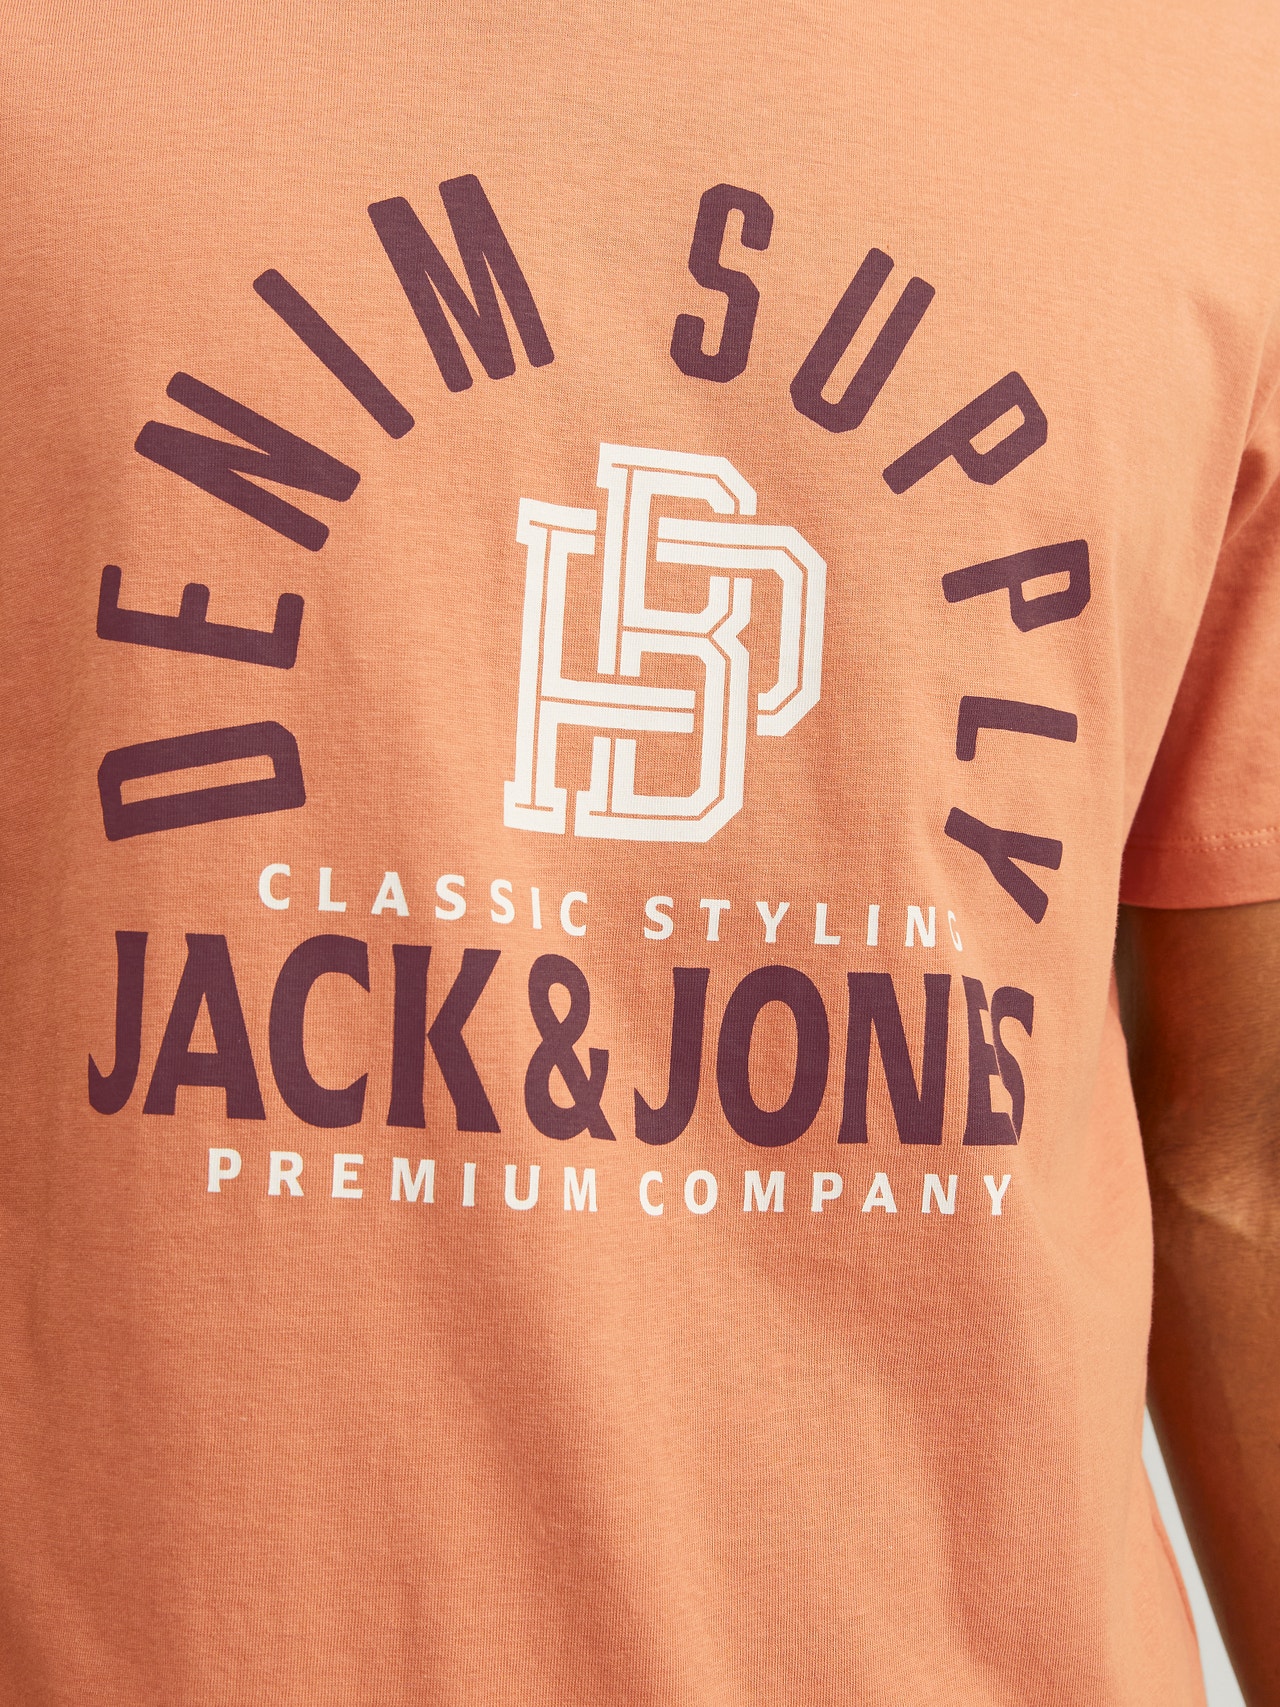 Jack & Jones T-shirt Estampar Decote Redondo -Sunburn - 12255165